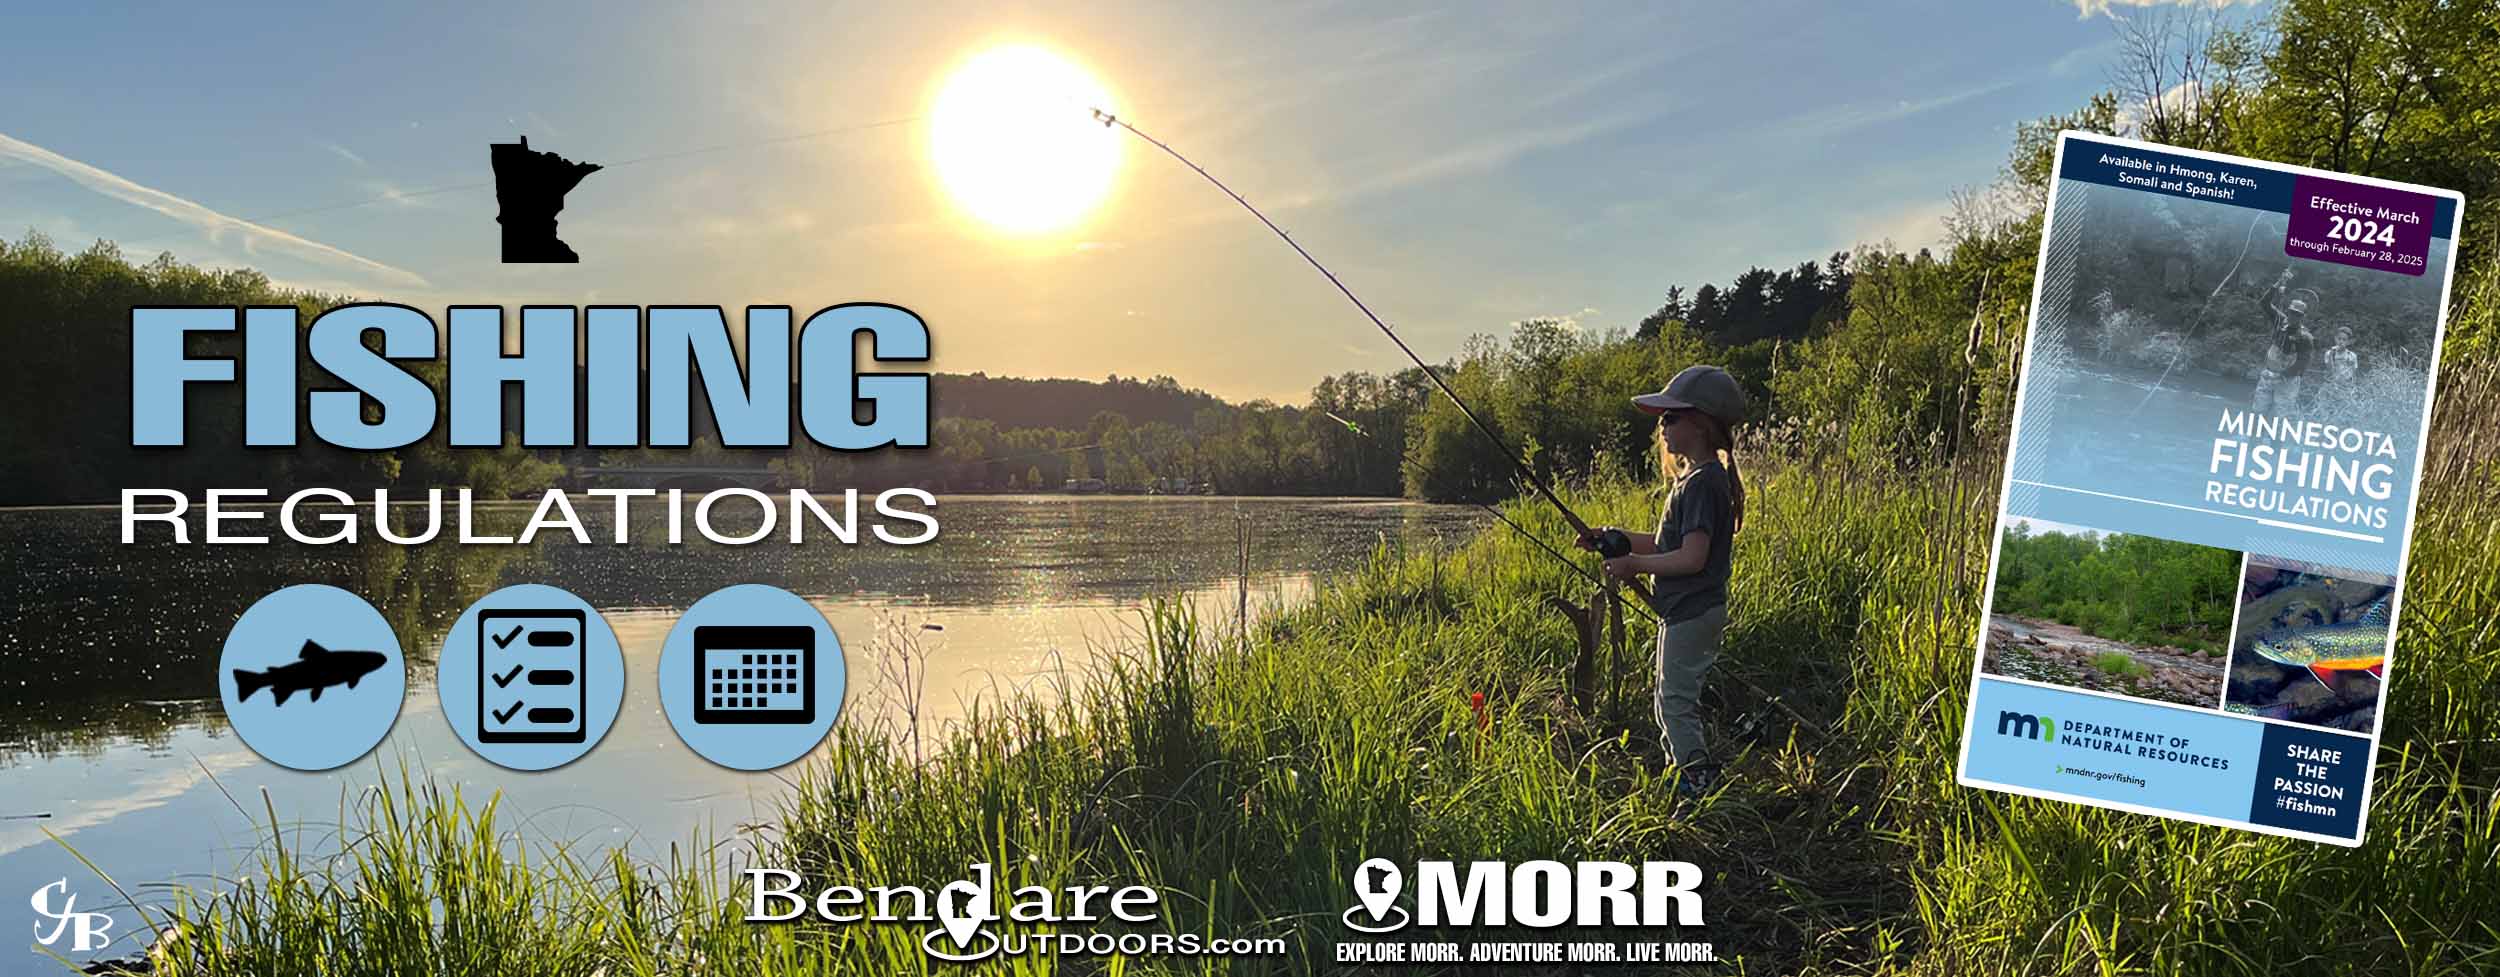 Minnesota Fishing Regulations | Bendare Outdoors